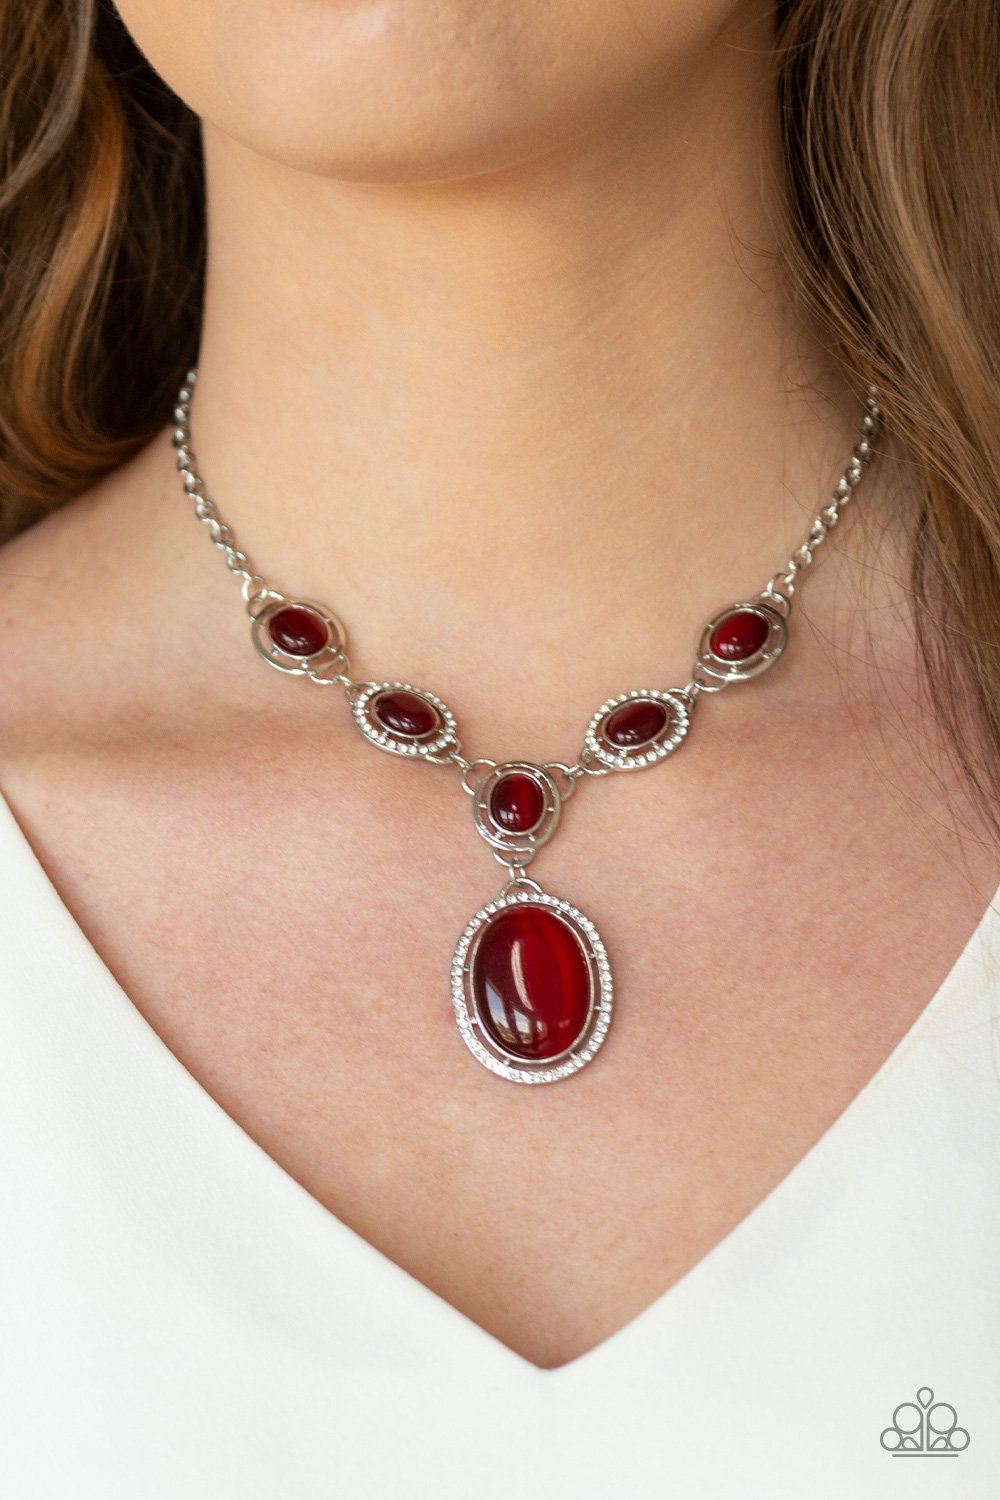 Metro Medallion-red-Paparazzi necklace